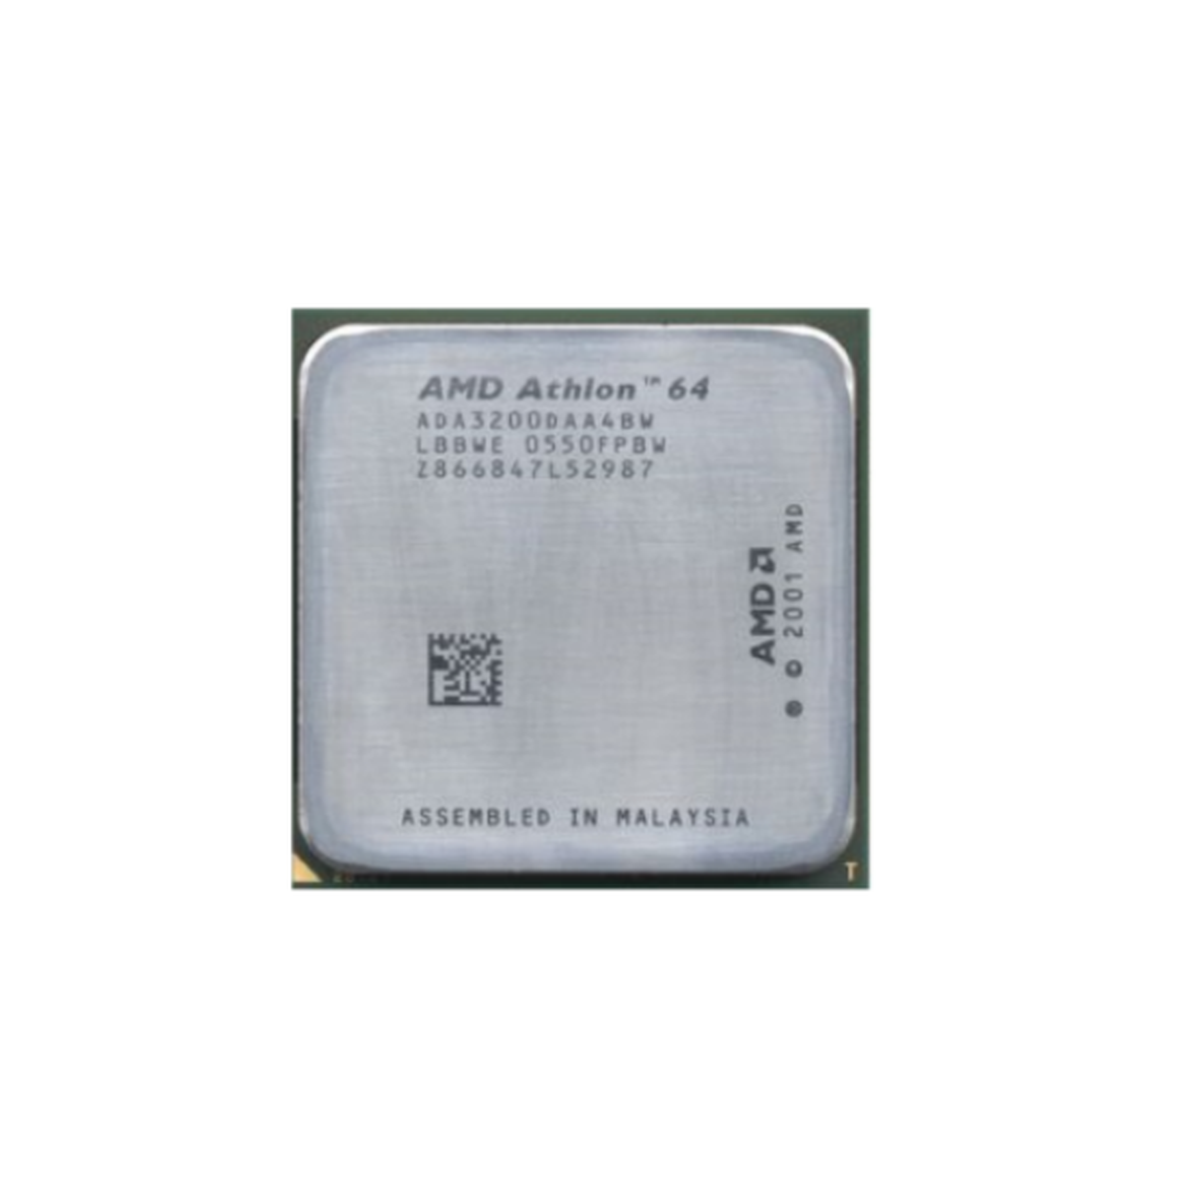 PROCESOR AMD ATHLON 64 3200+ 2GHZ s.939